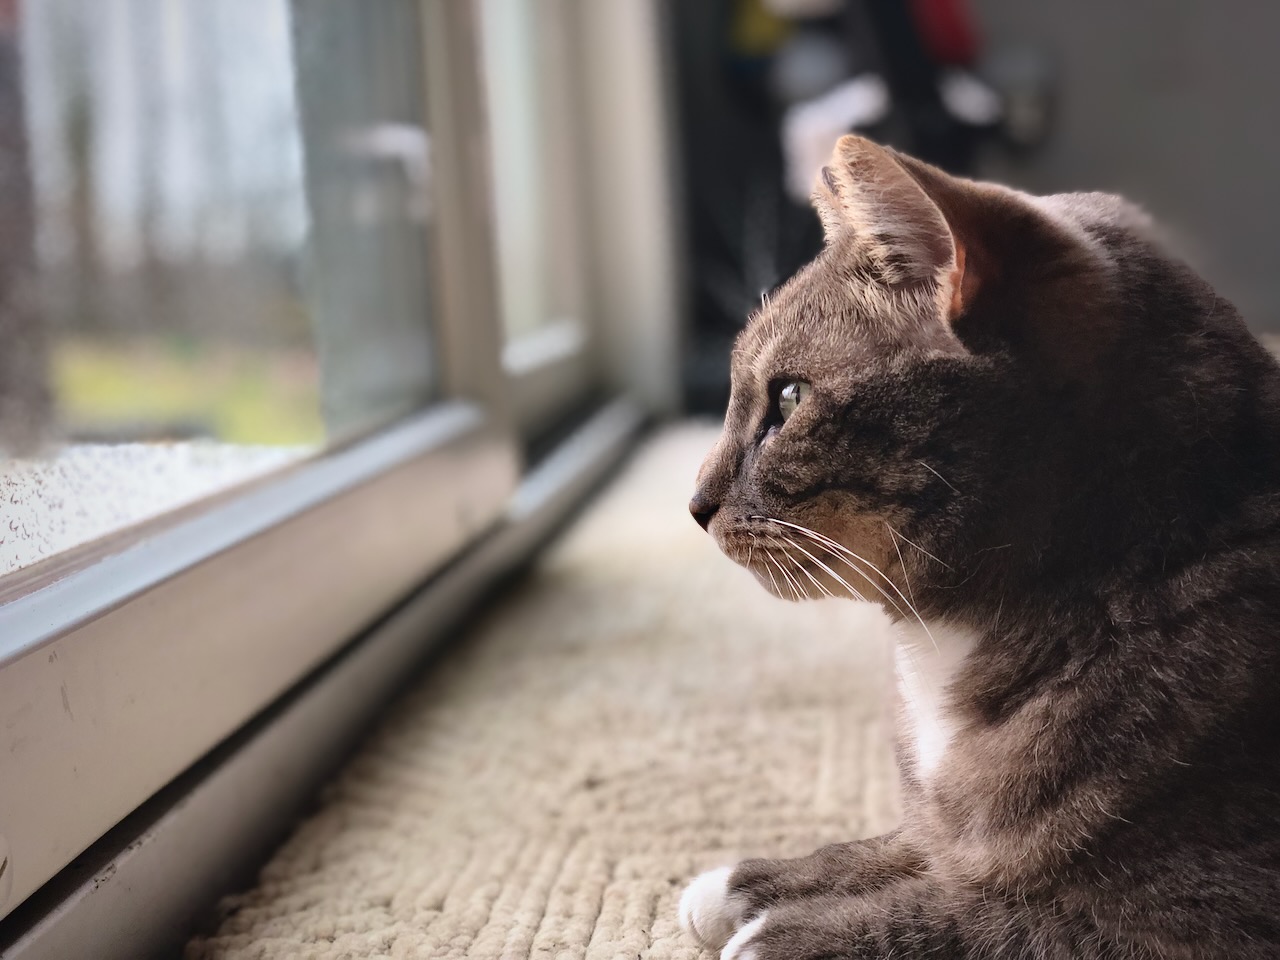 Our cat, Dorian, bird-watching at the window